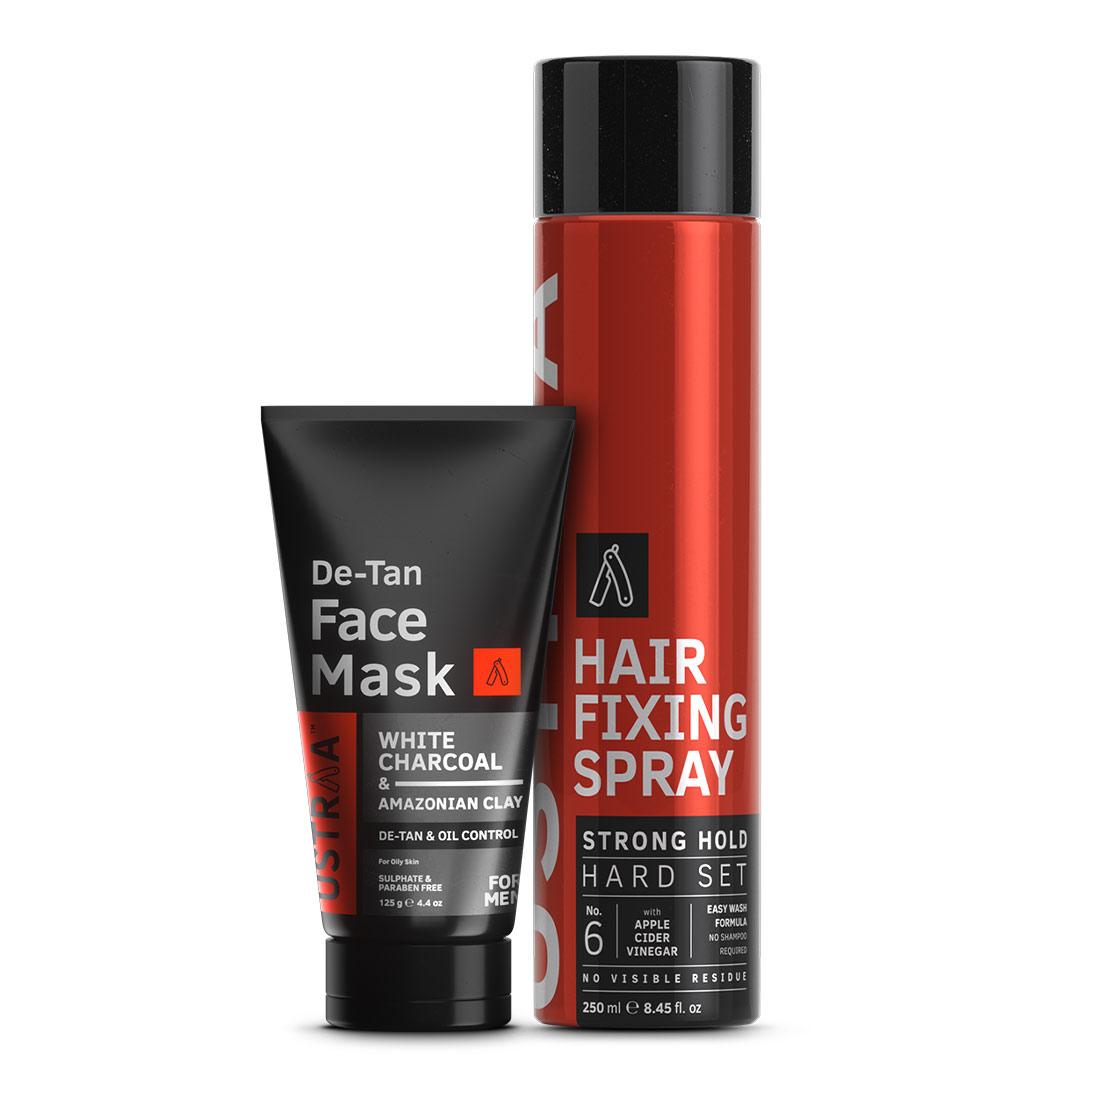 Hair Fixing Spray & Face Mask Oily Skin